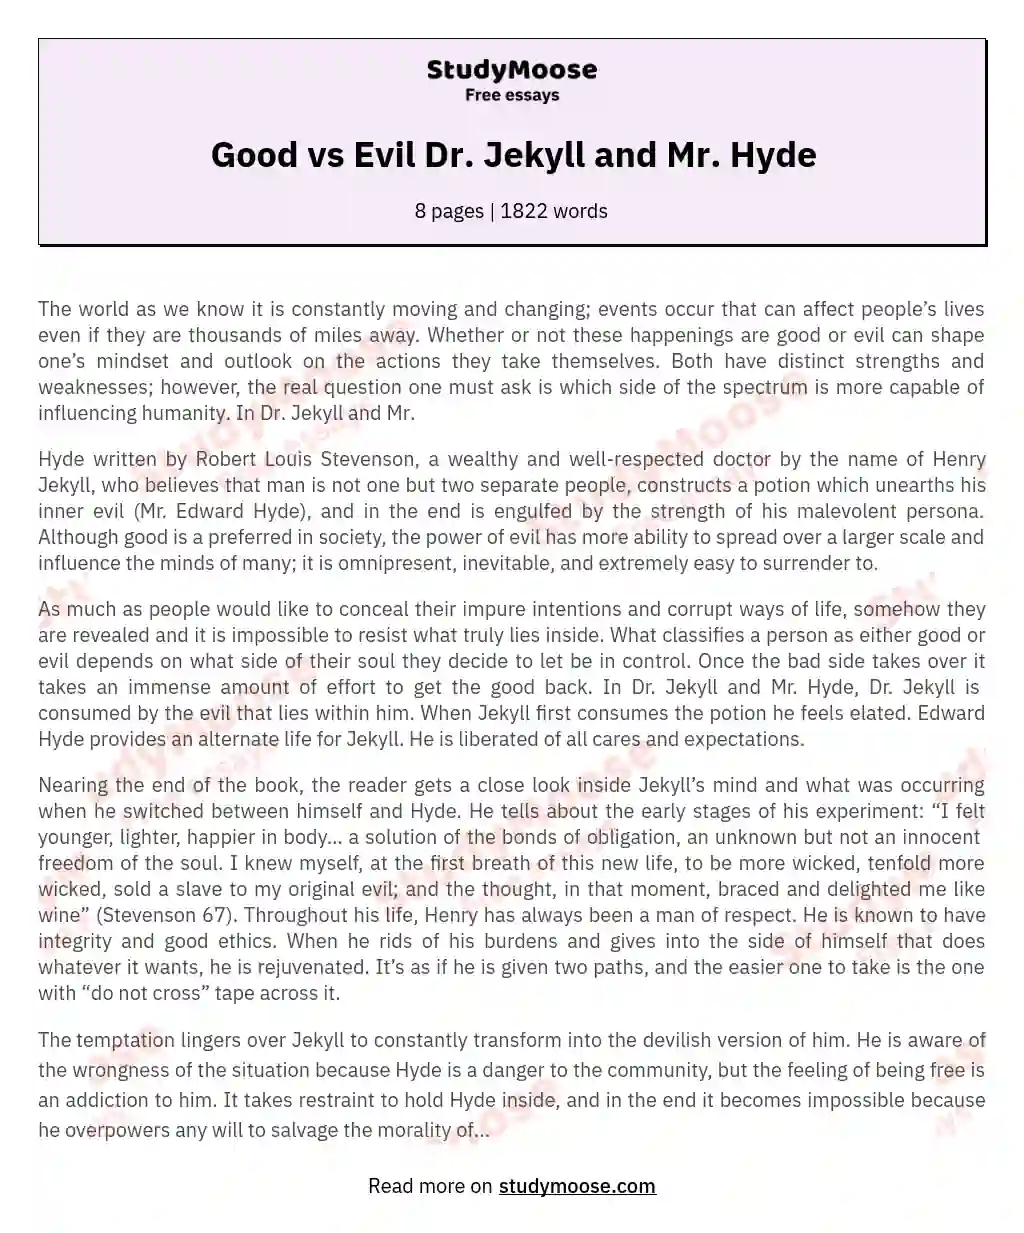 Good vs Evil Dr. Jekyll and Mr. Hyde essay